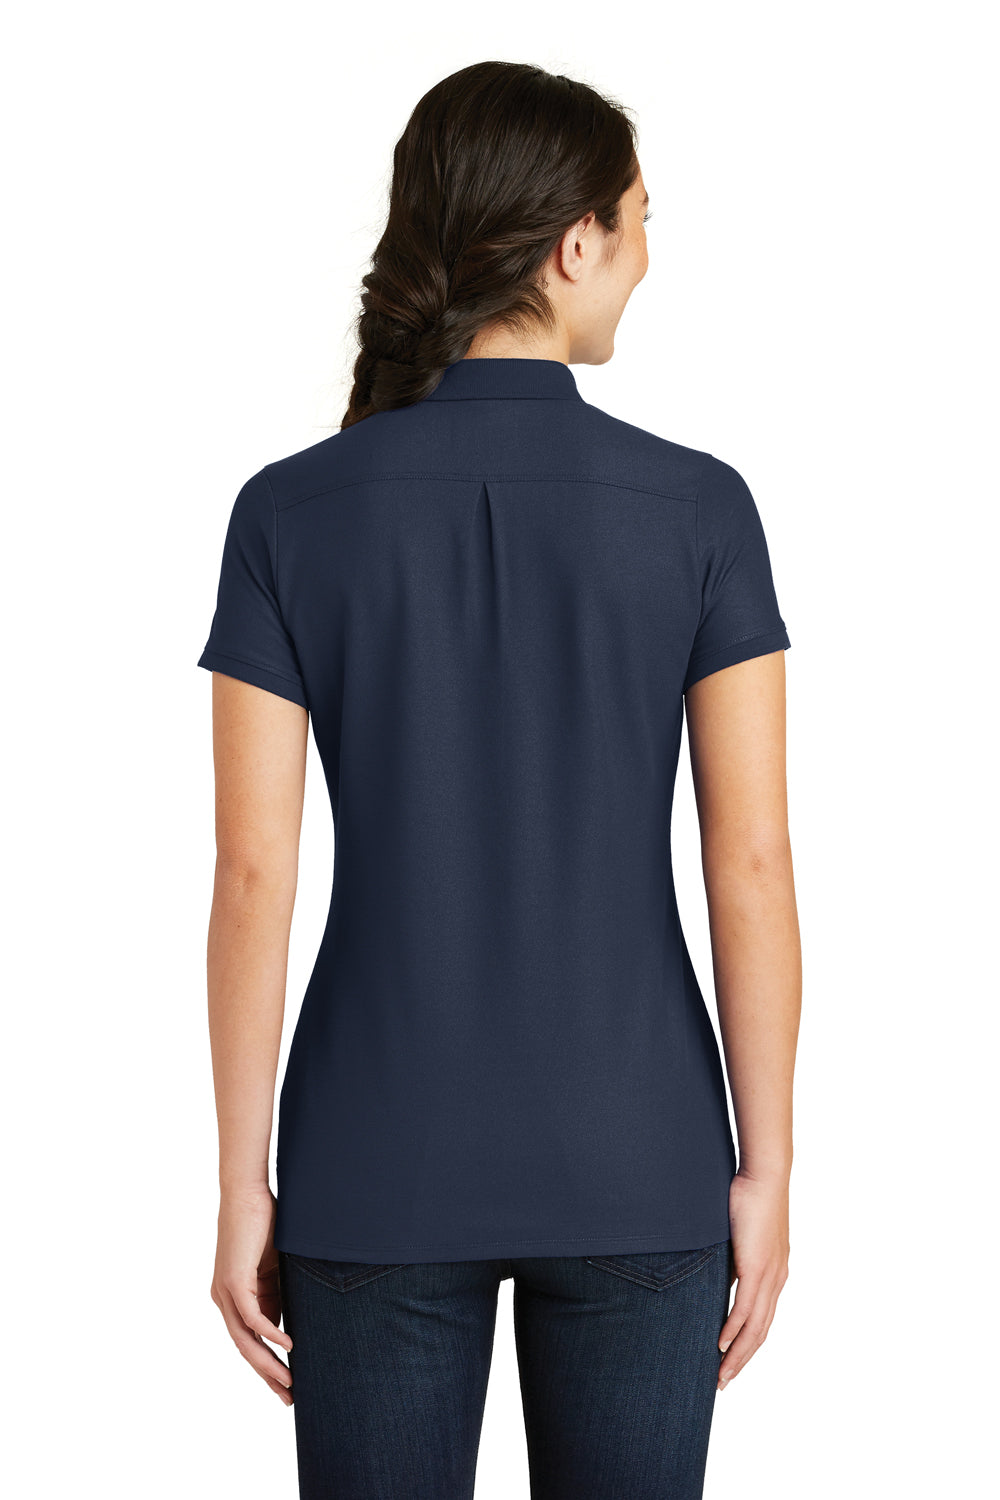 New Era LNEA300 Womens Venue Home Plate Moisture Wicking Short Sleeve Polo Shirt Navy Blue Back